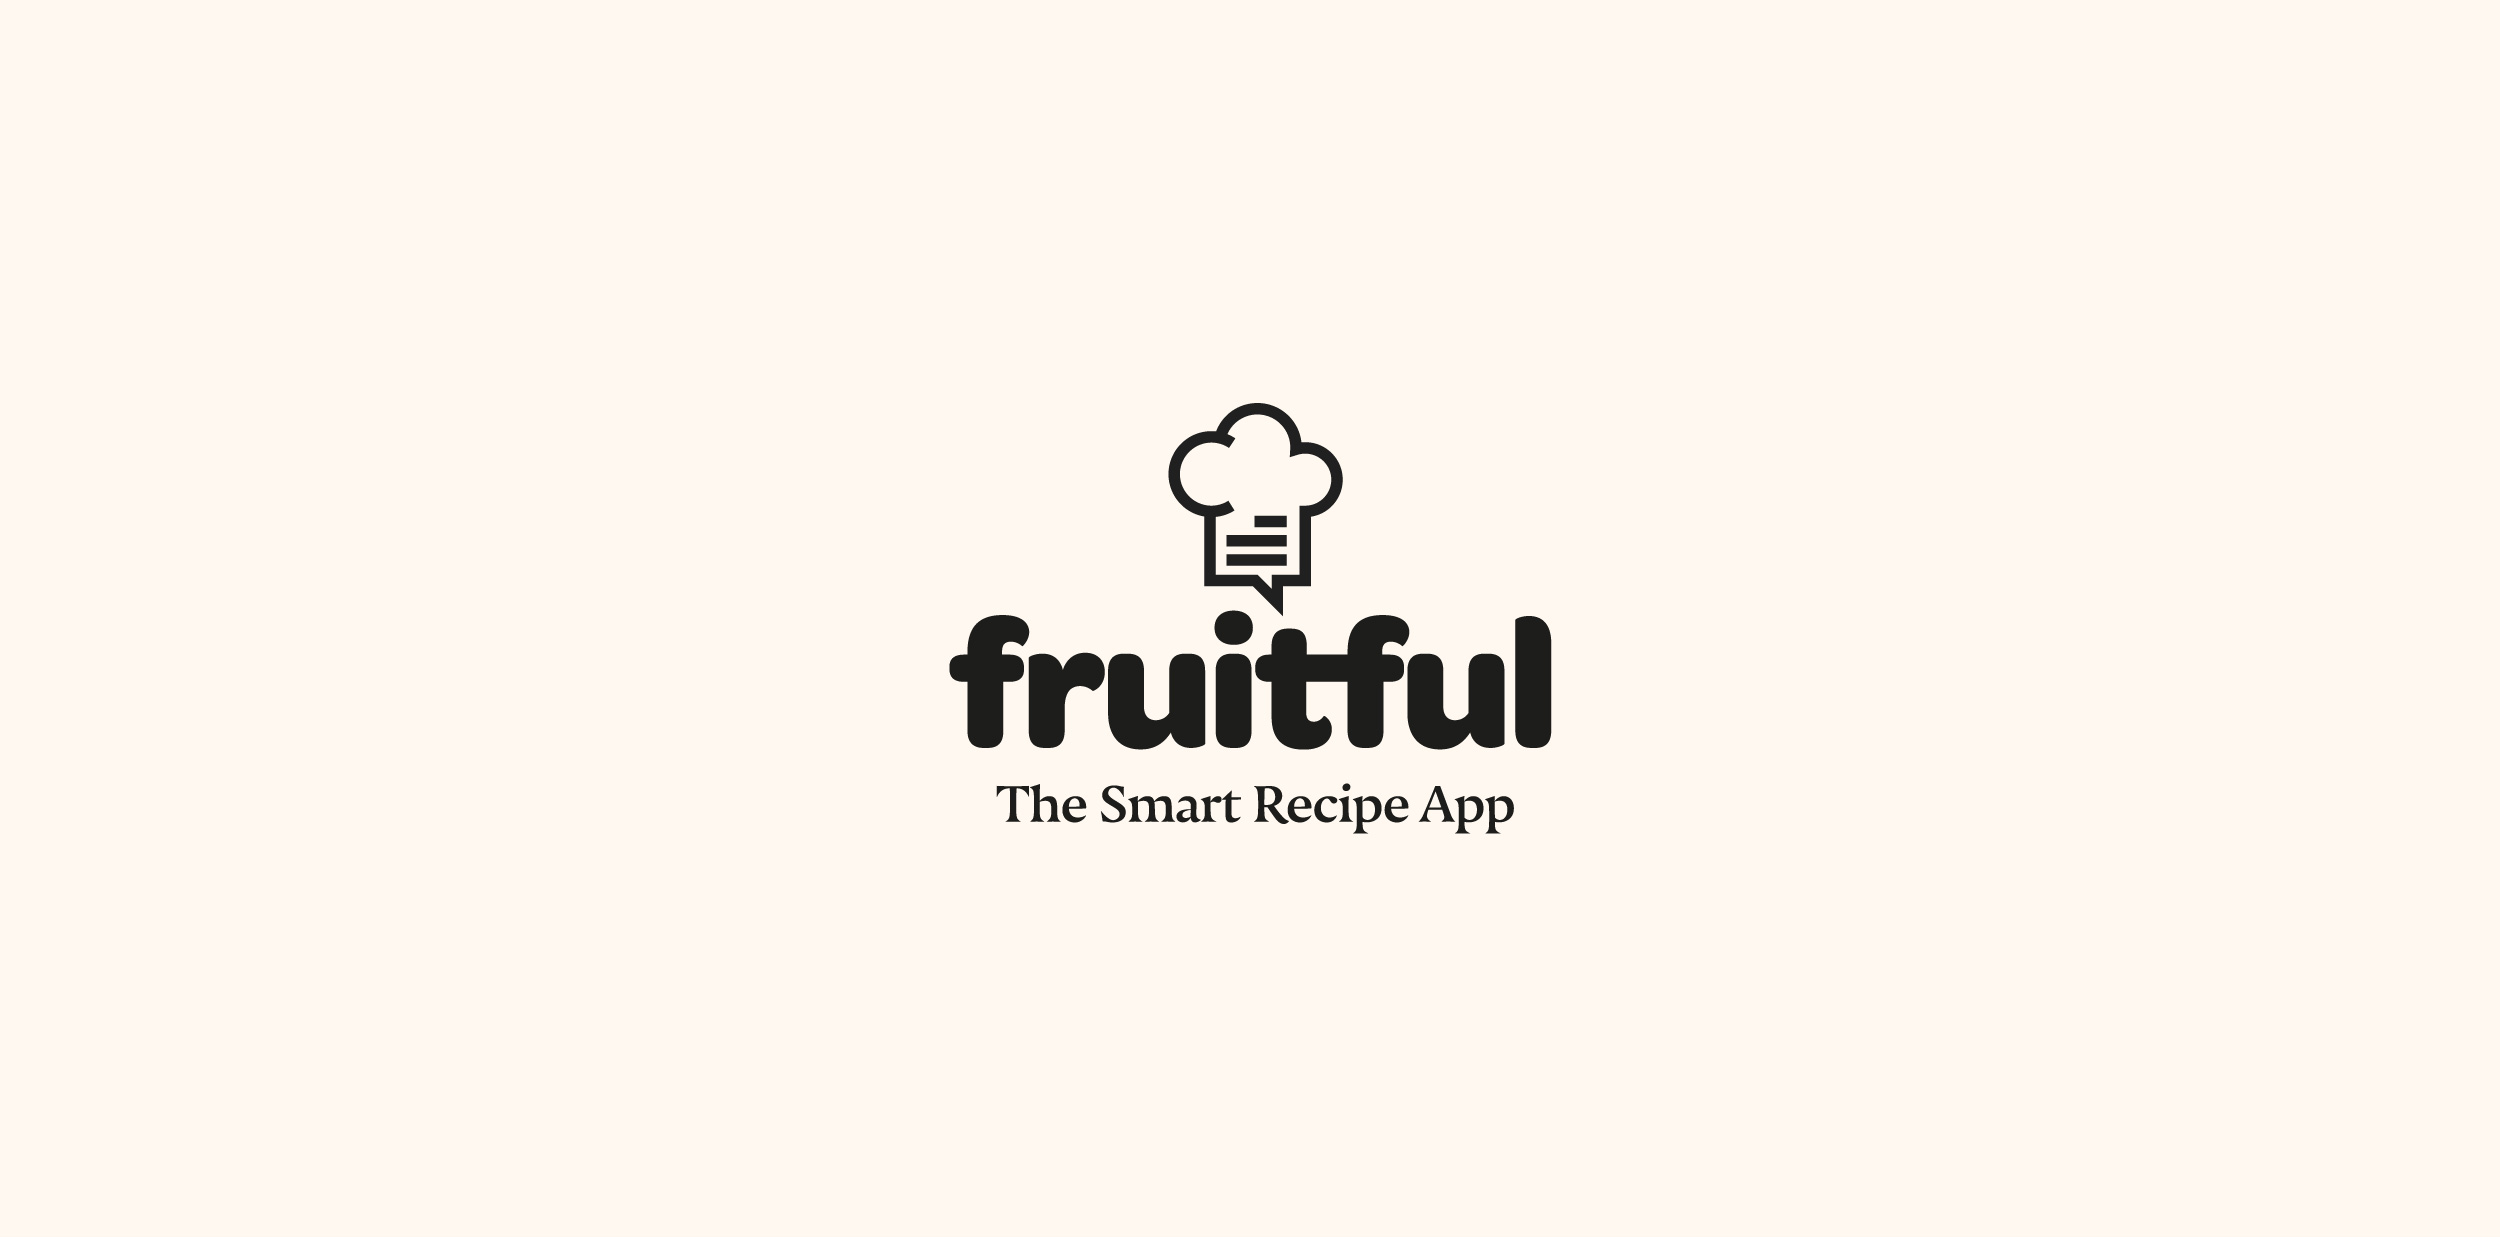 Fruitful app design and branding